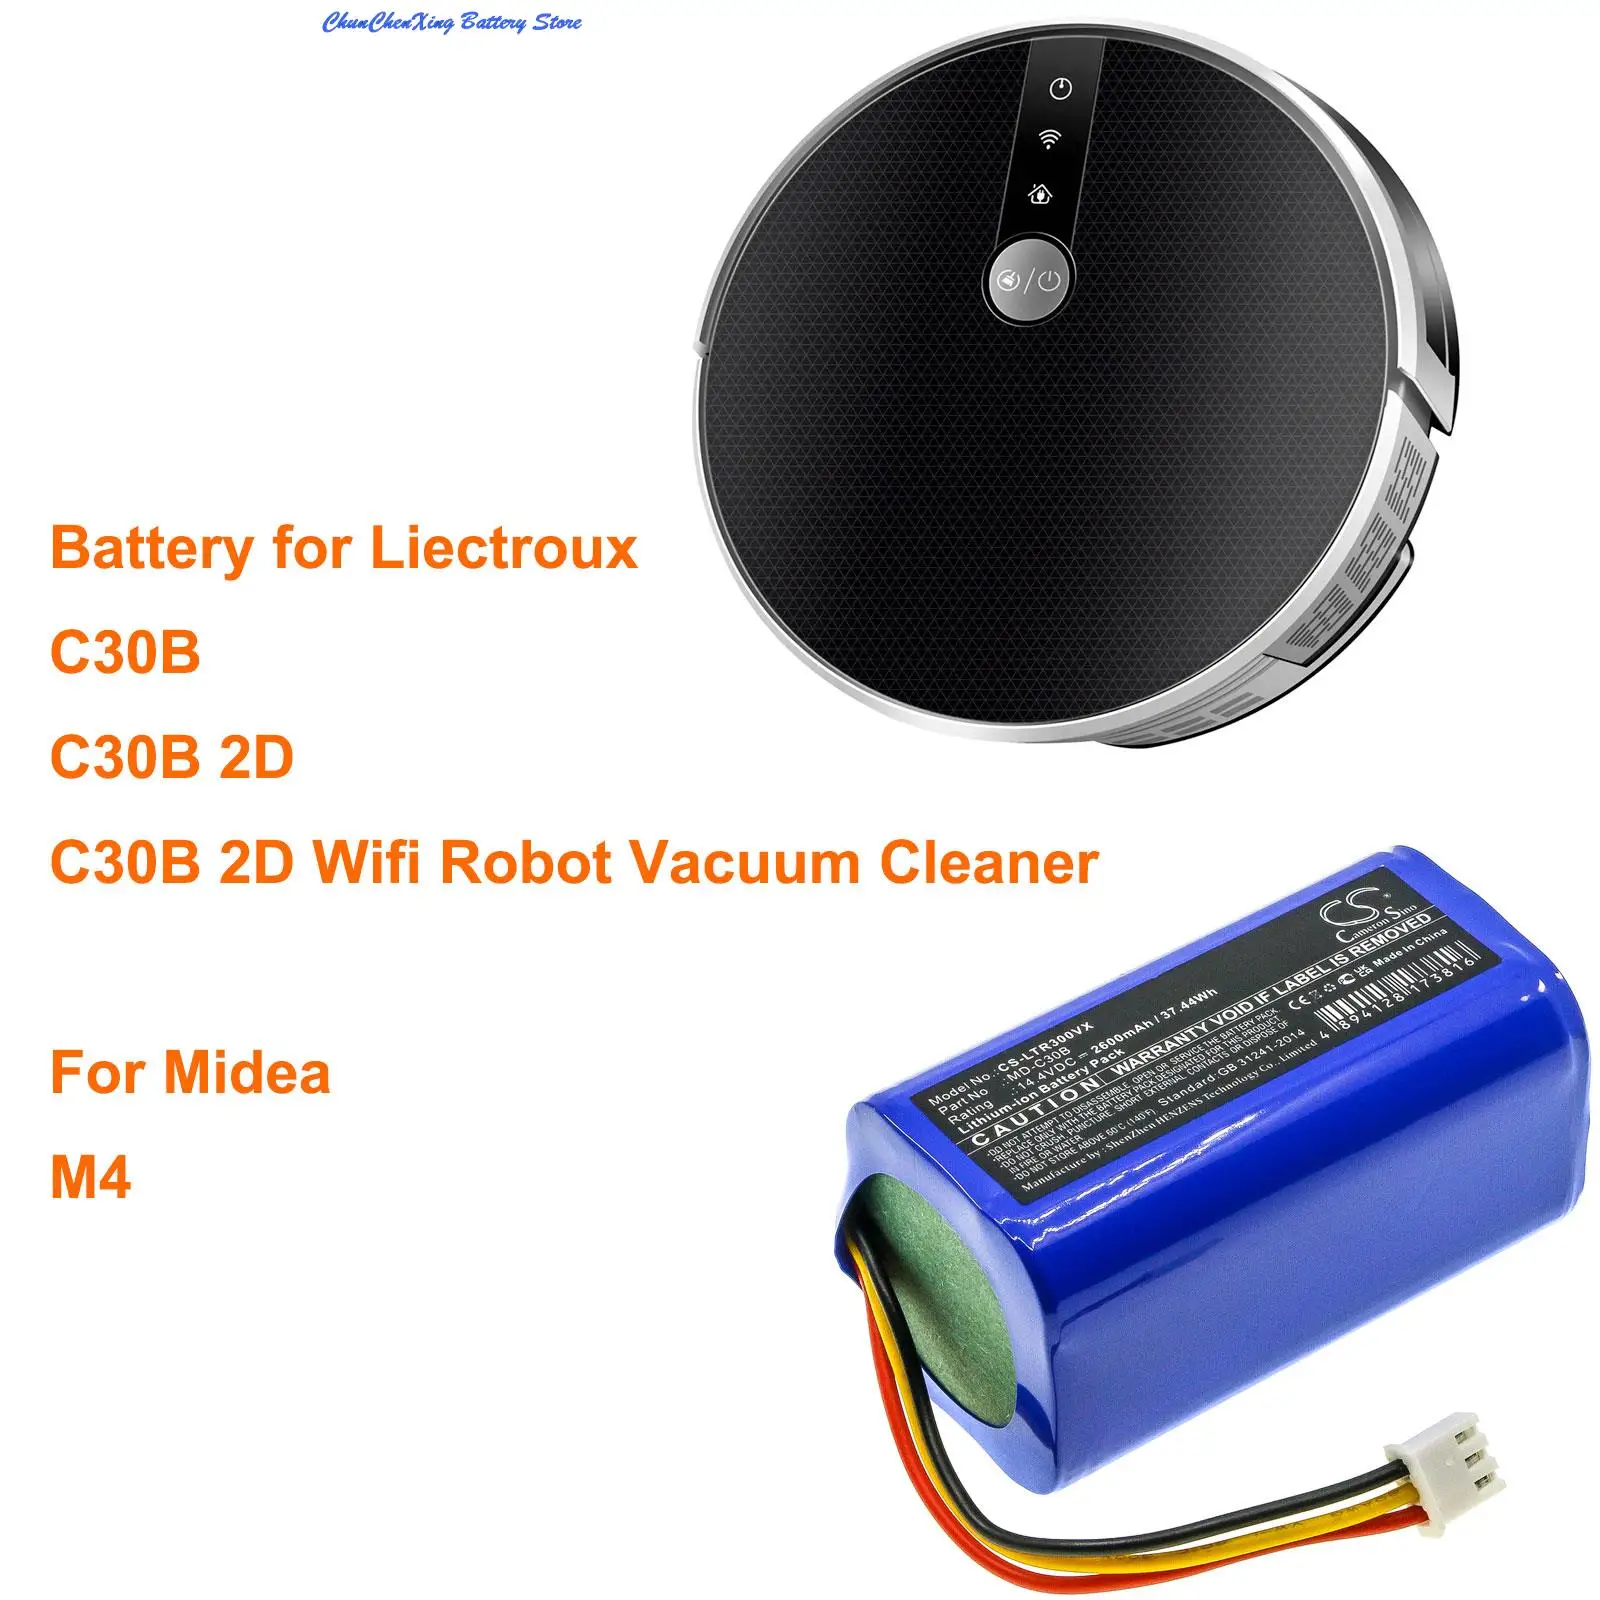 

Cameron Sino 2600mAh Vacuum Cleaner Battery MD-C30B for Liectroux C30B, C30B 2D, C30B 2D Wifi Robot Vacuum Cleaner, For Midea M4